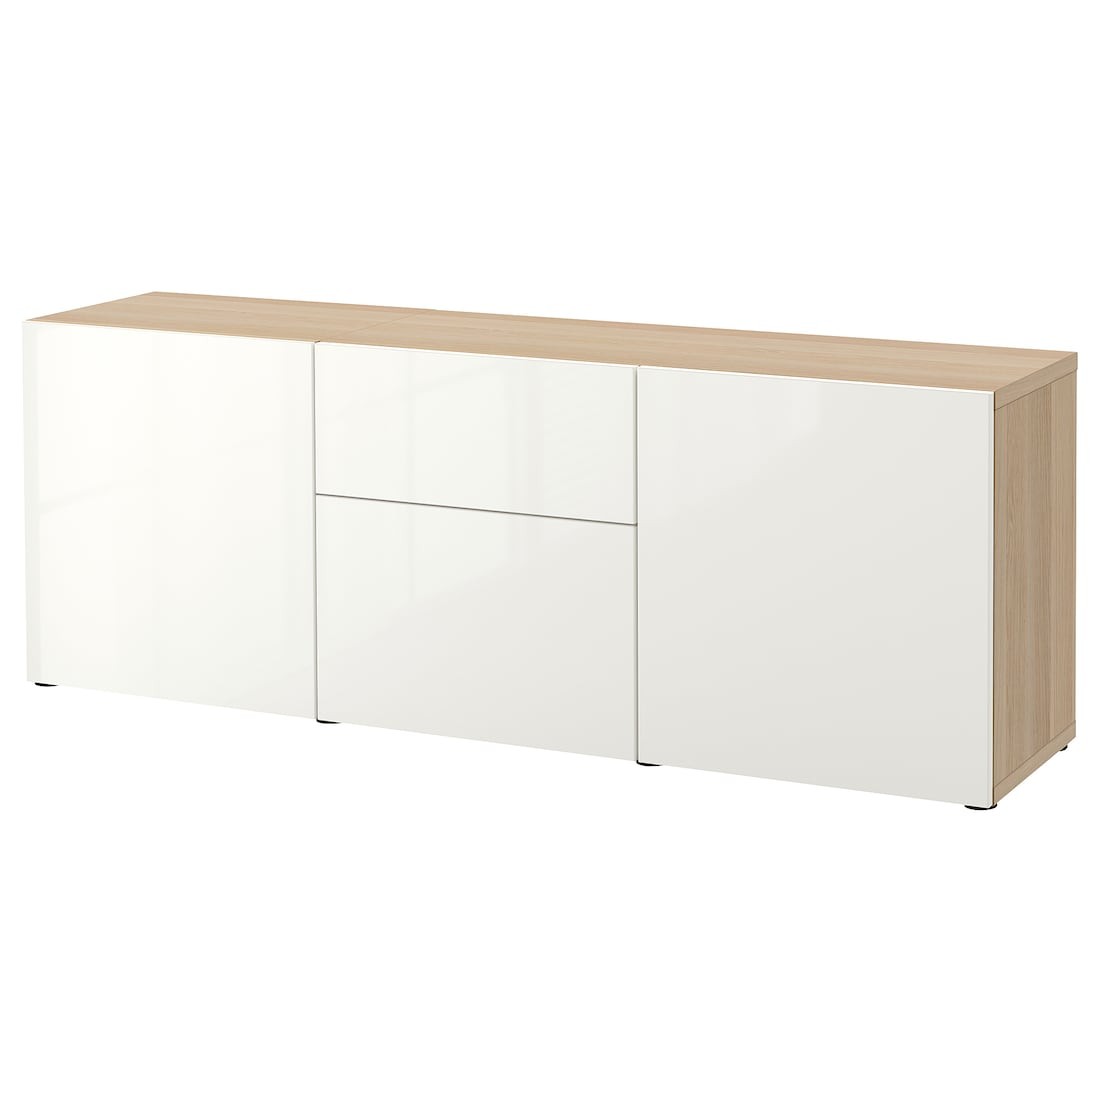 IKEA BESTÅ БЕСТО Комбинация для хранения с ящиками, под беленый дуб / Selsviken глянцевый / белый, 180x42x65 см 29325188 | 293.251.88